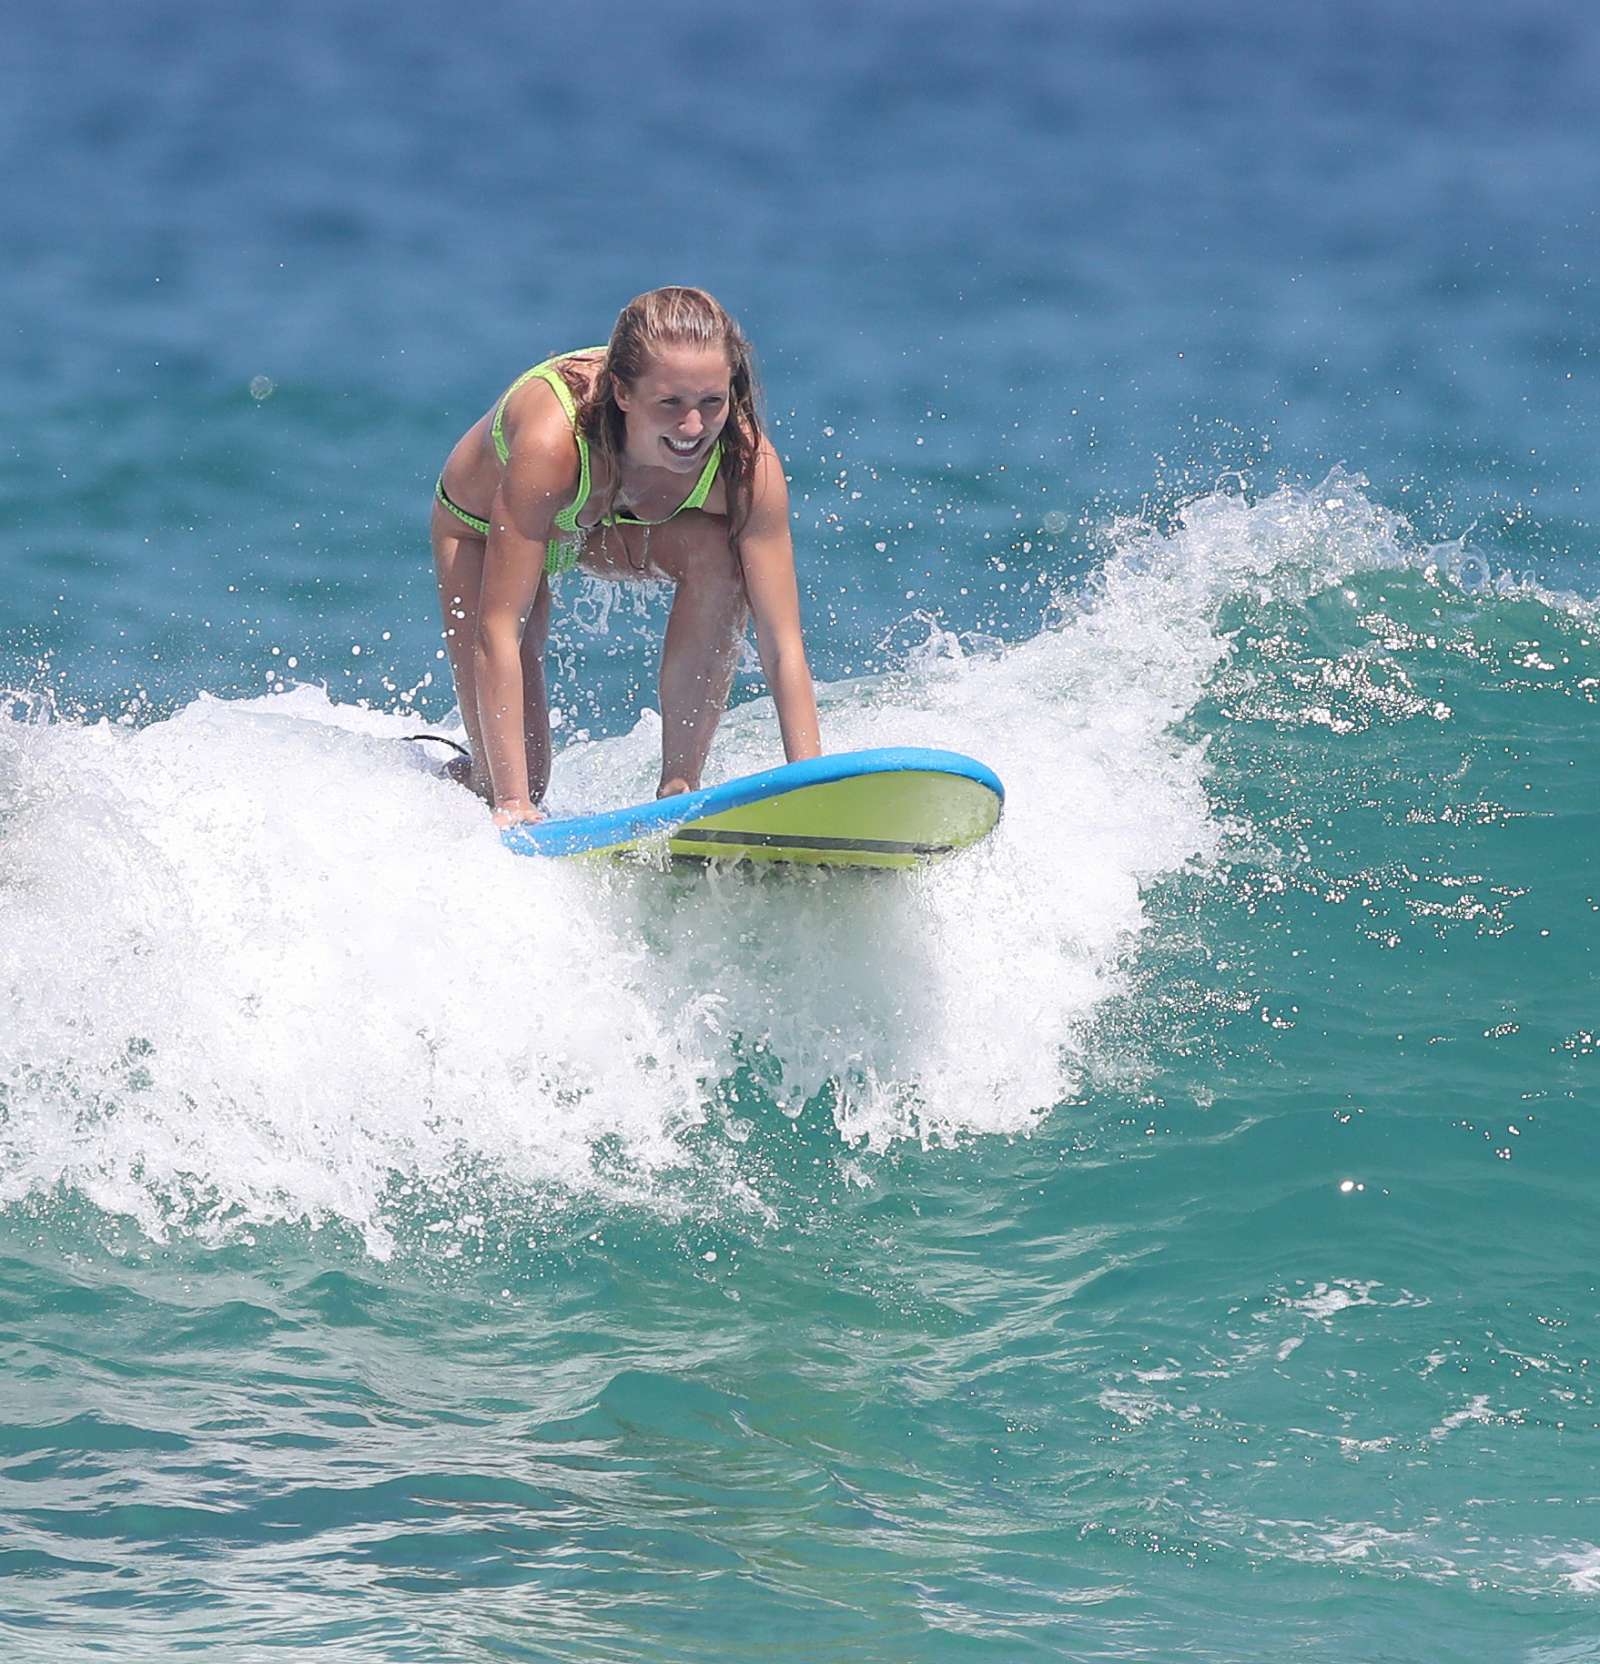 Sailor Brinkley Cook in Neon Green Bikini â€“ Surfing at Bondi Beach